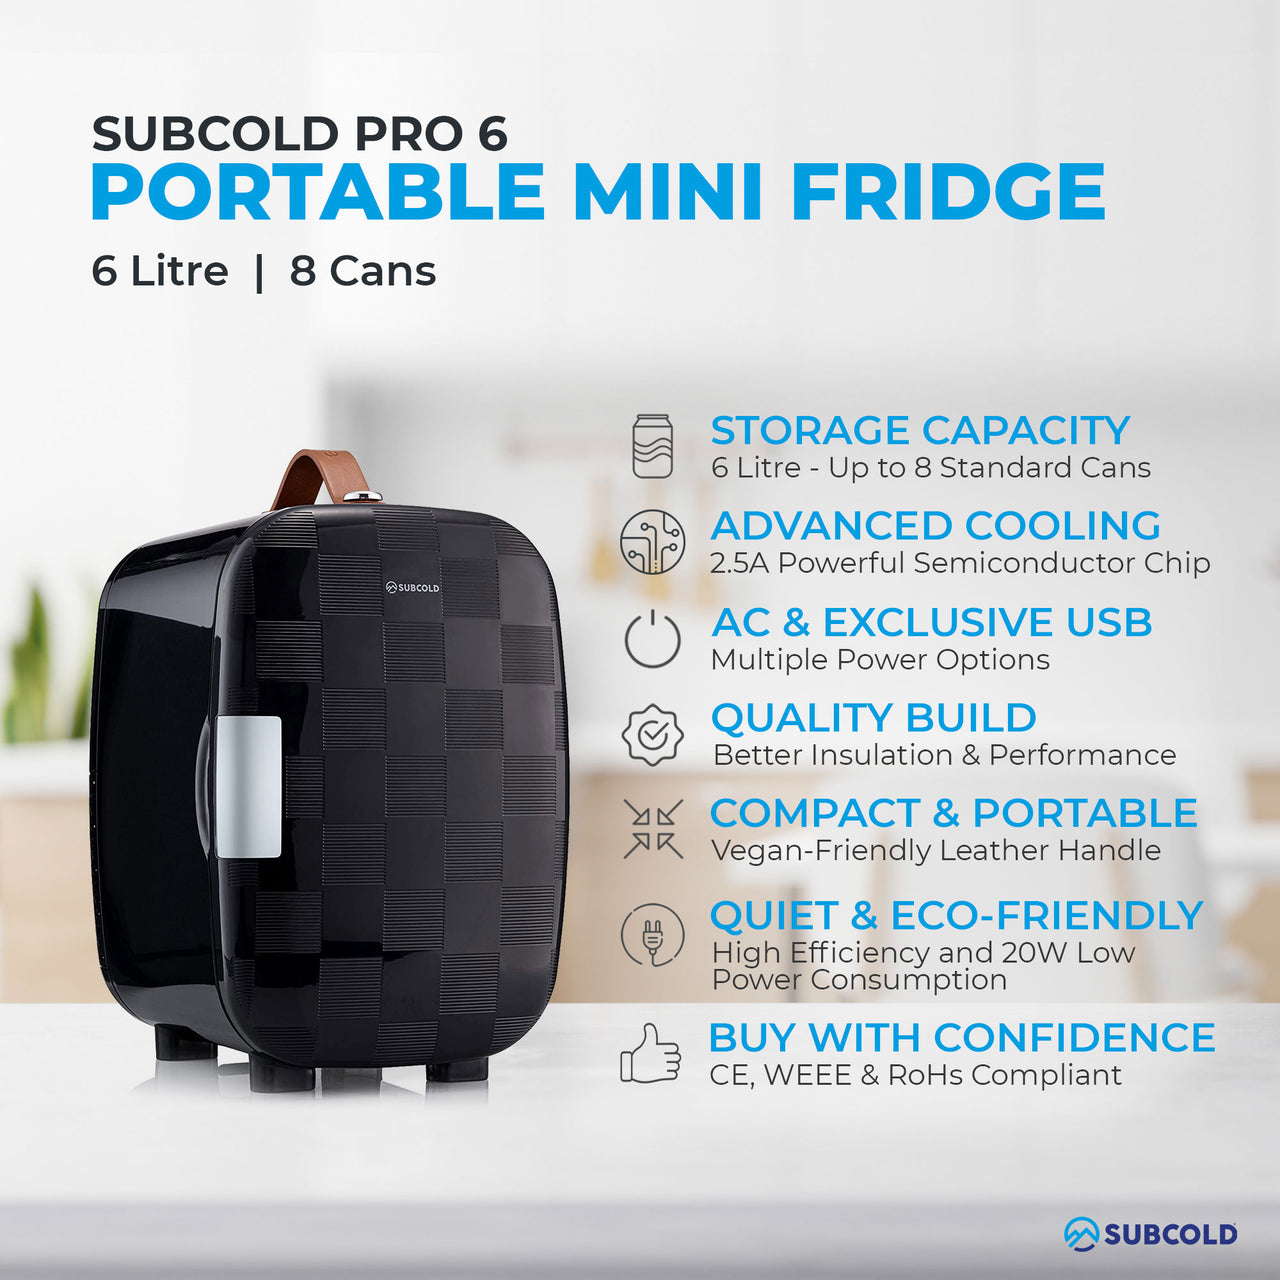 Subcold Pro 6 litre black chequered mini fridge features infographic